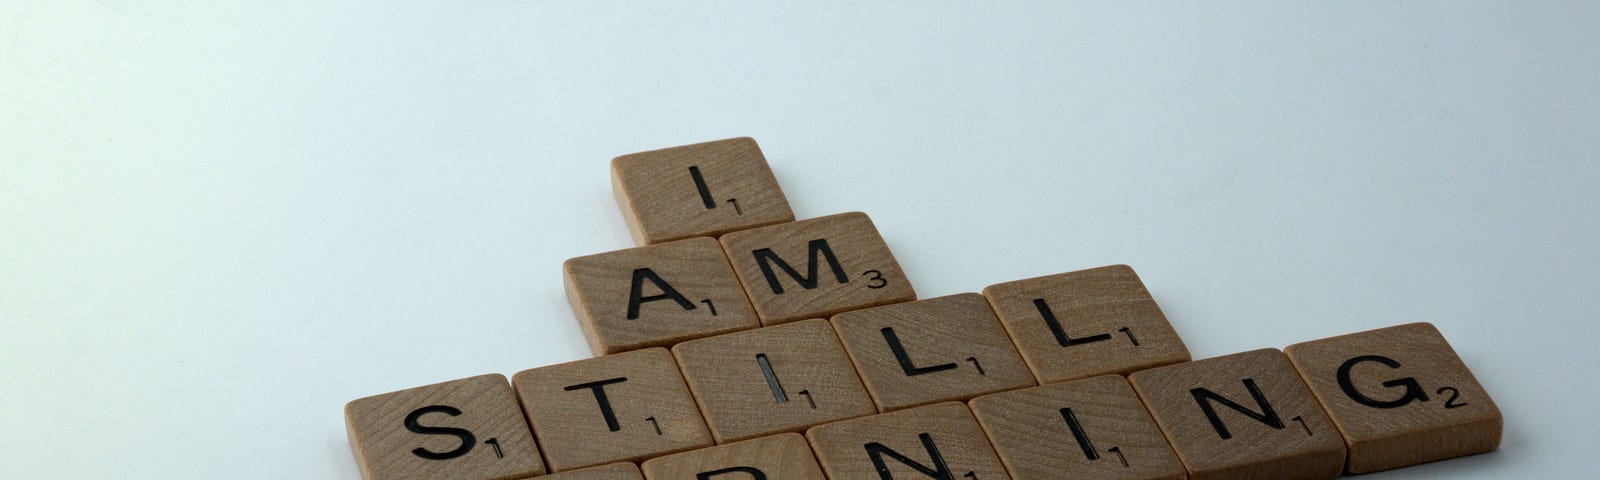 Lettered tiles spelling out, “I am still learning”